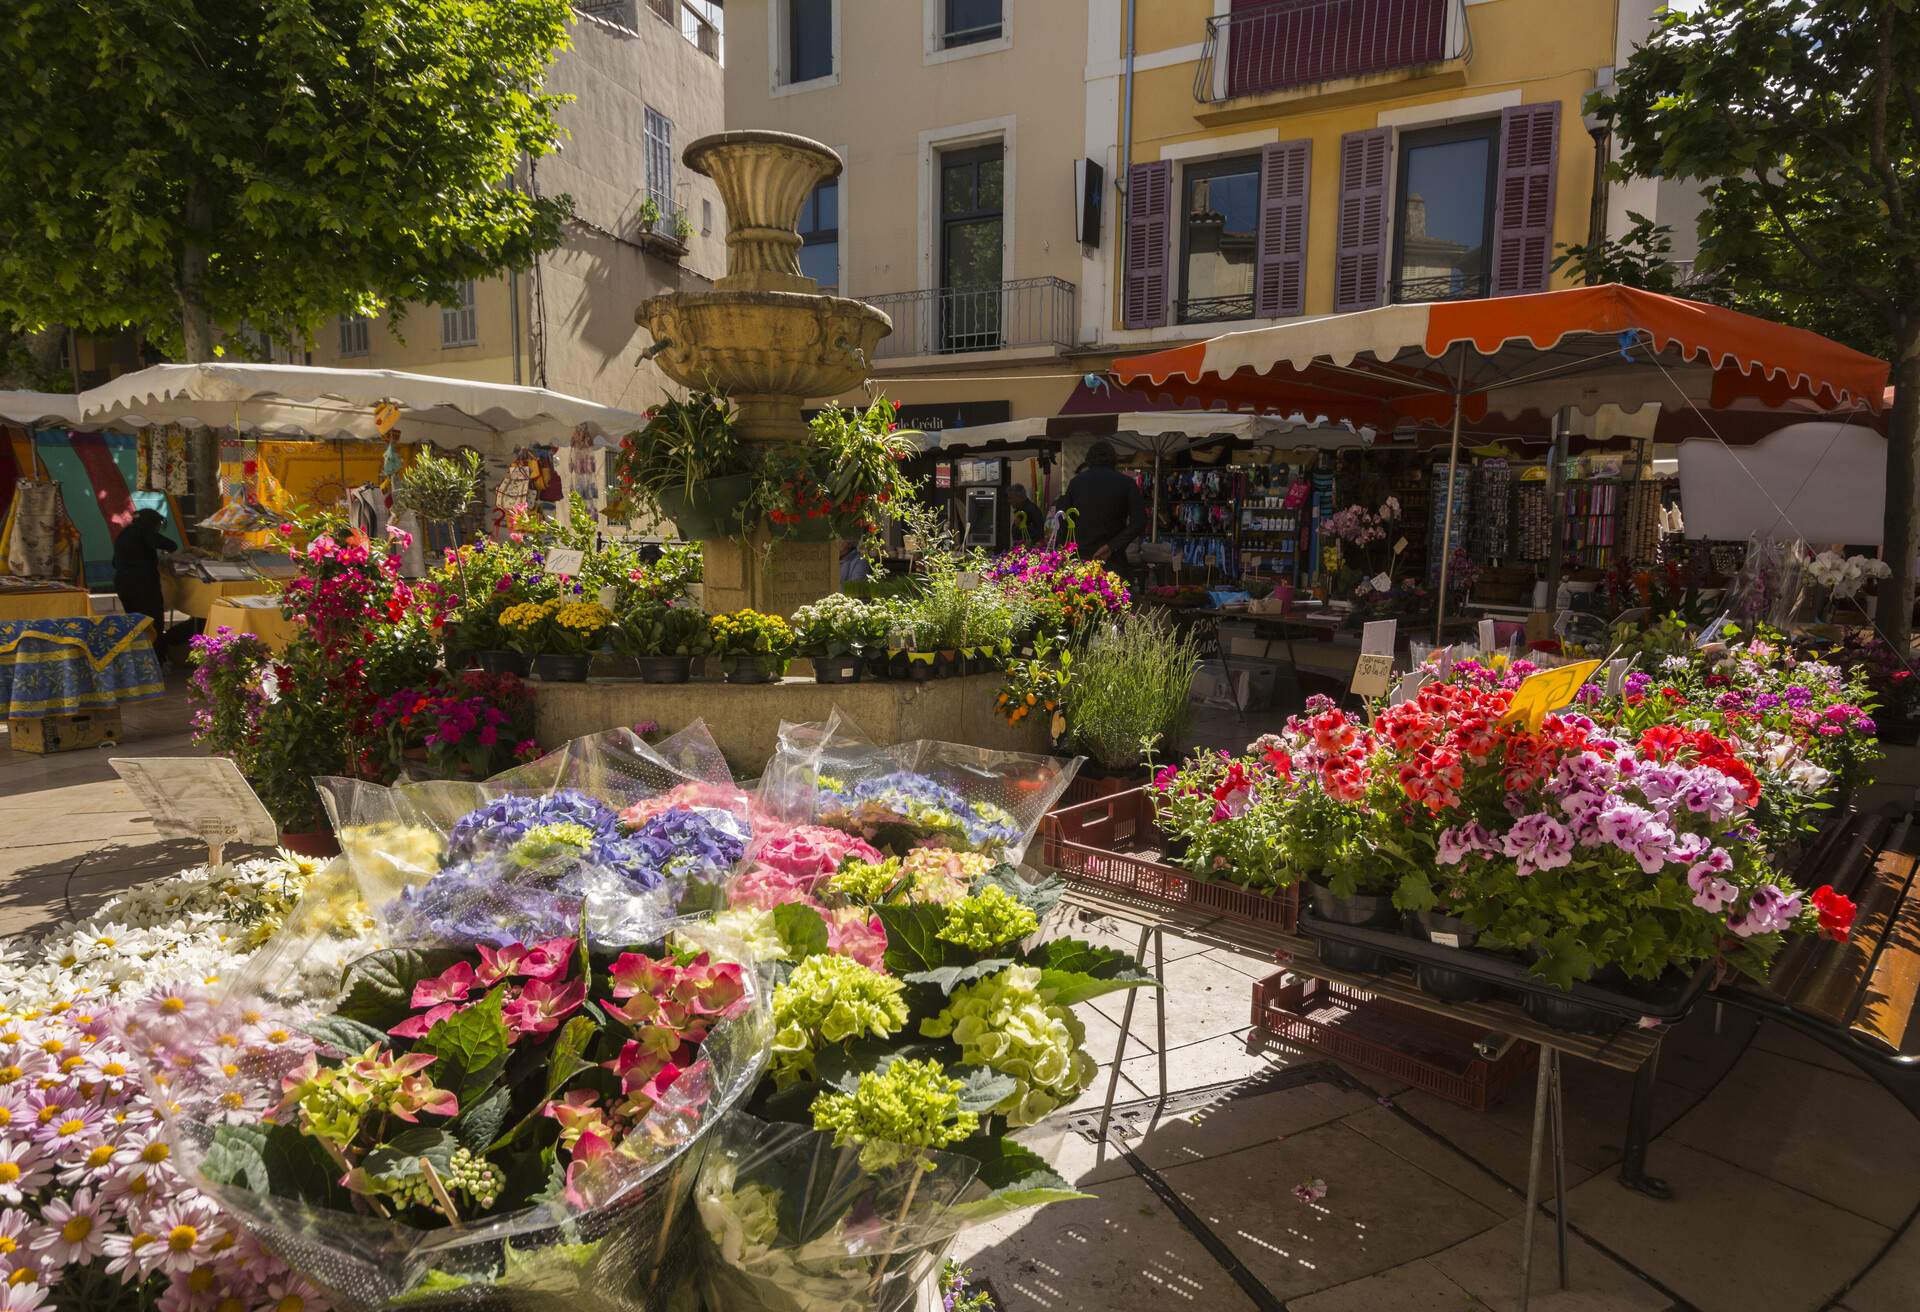 France, Côte d'Azur, Cassis, street scene, flower vendor